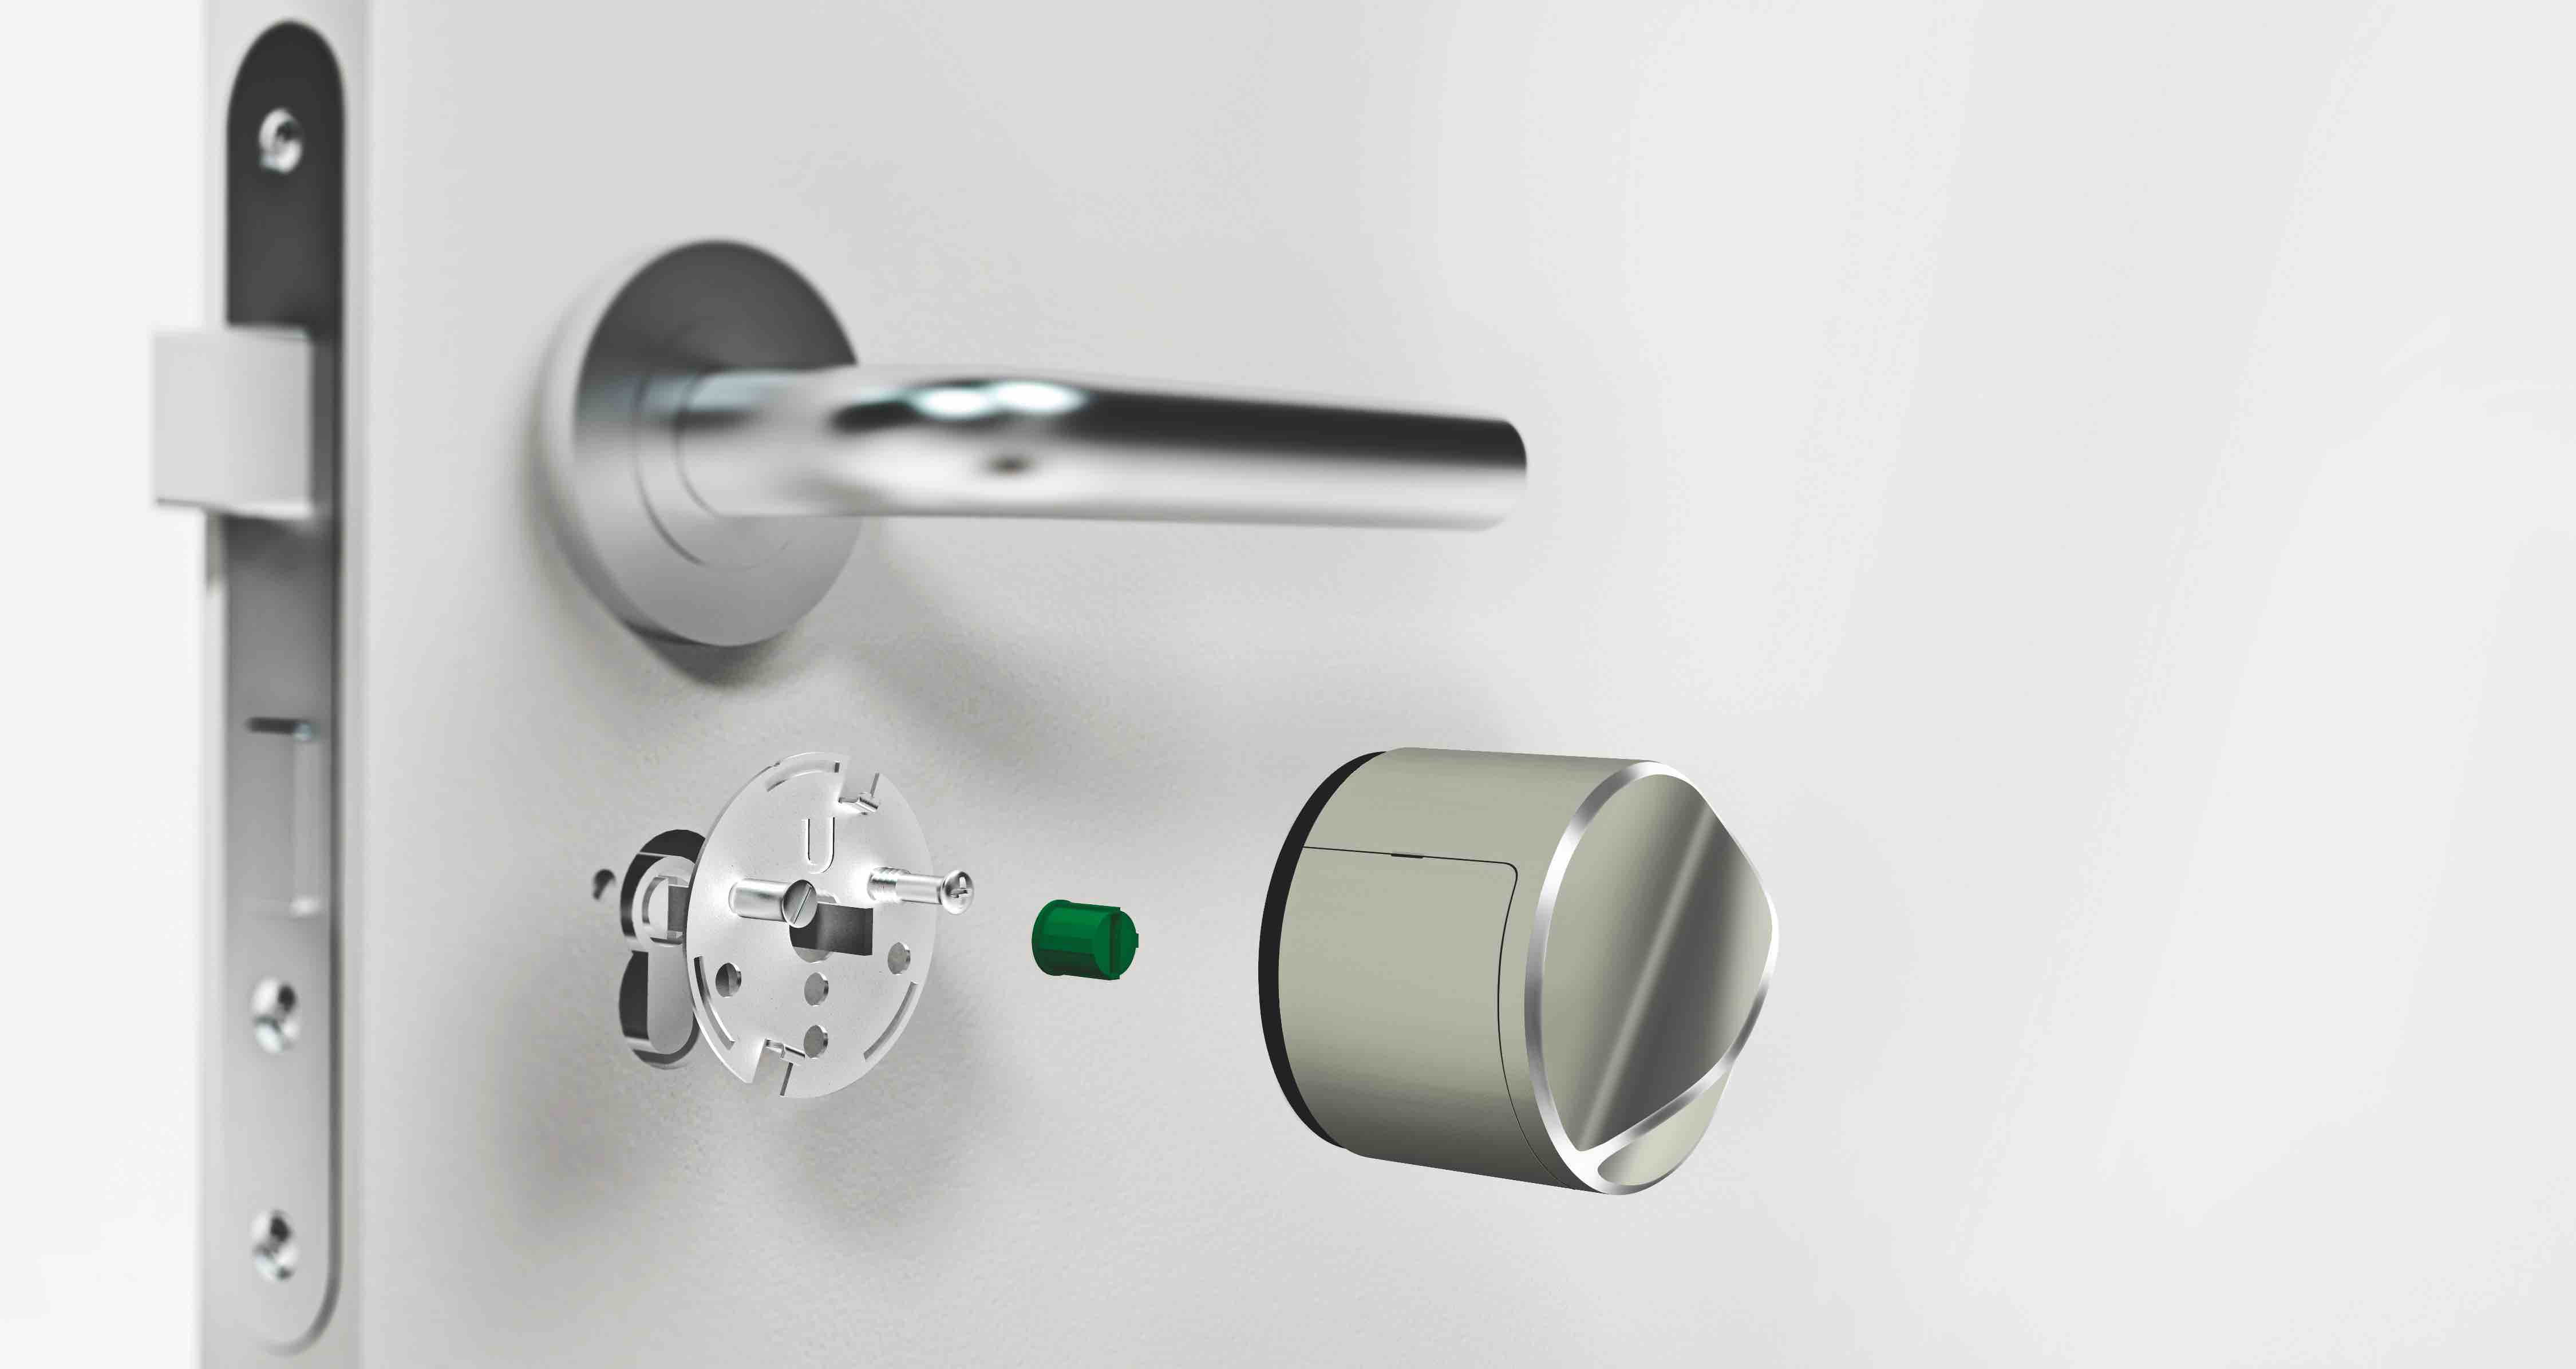 Wireless smart lock makers react to security scares - nordicsemi.com